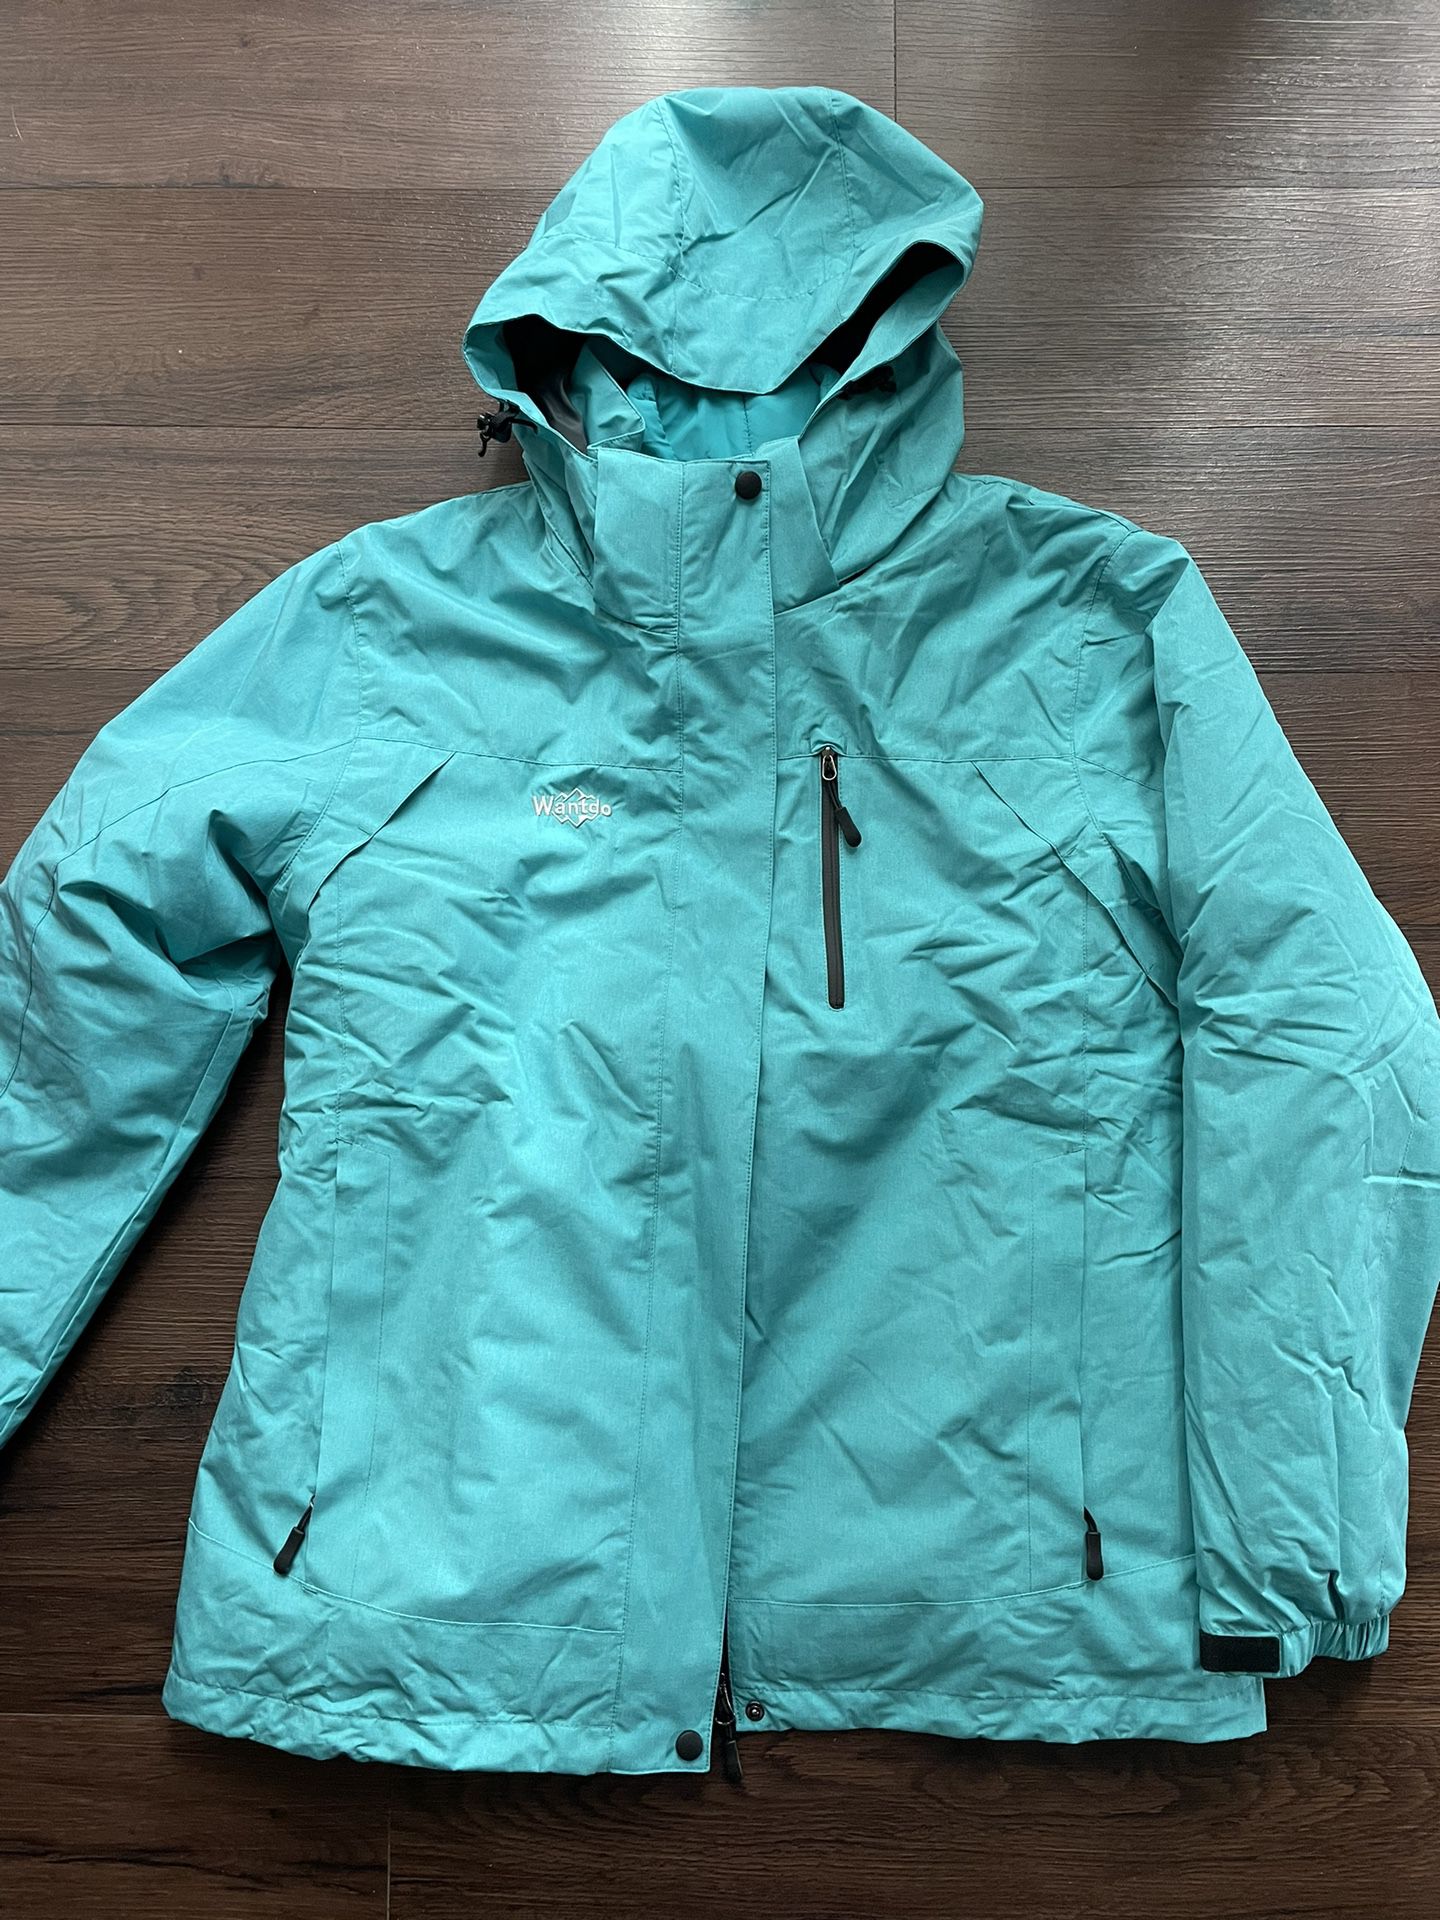 New Women's Waterproof Winter Coat Ski Jacket & Snow Rain Jacket with Hood Atna Core, size L